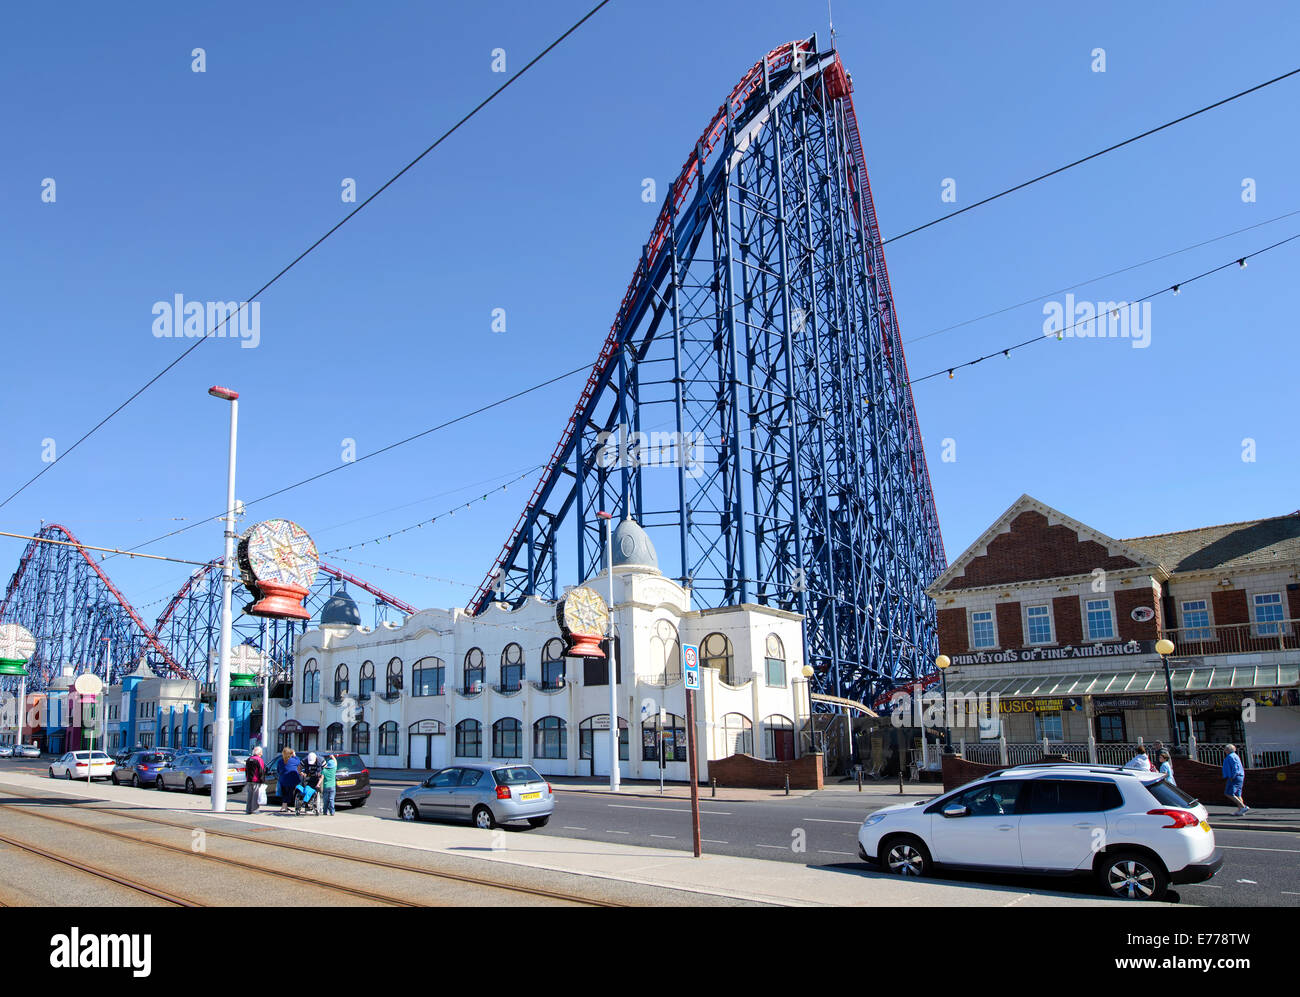 The Big One roller coaster in Blackpool Pleasure Beach, Blackpool, Lancashire Stock Photo